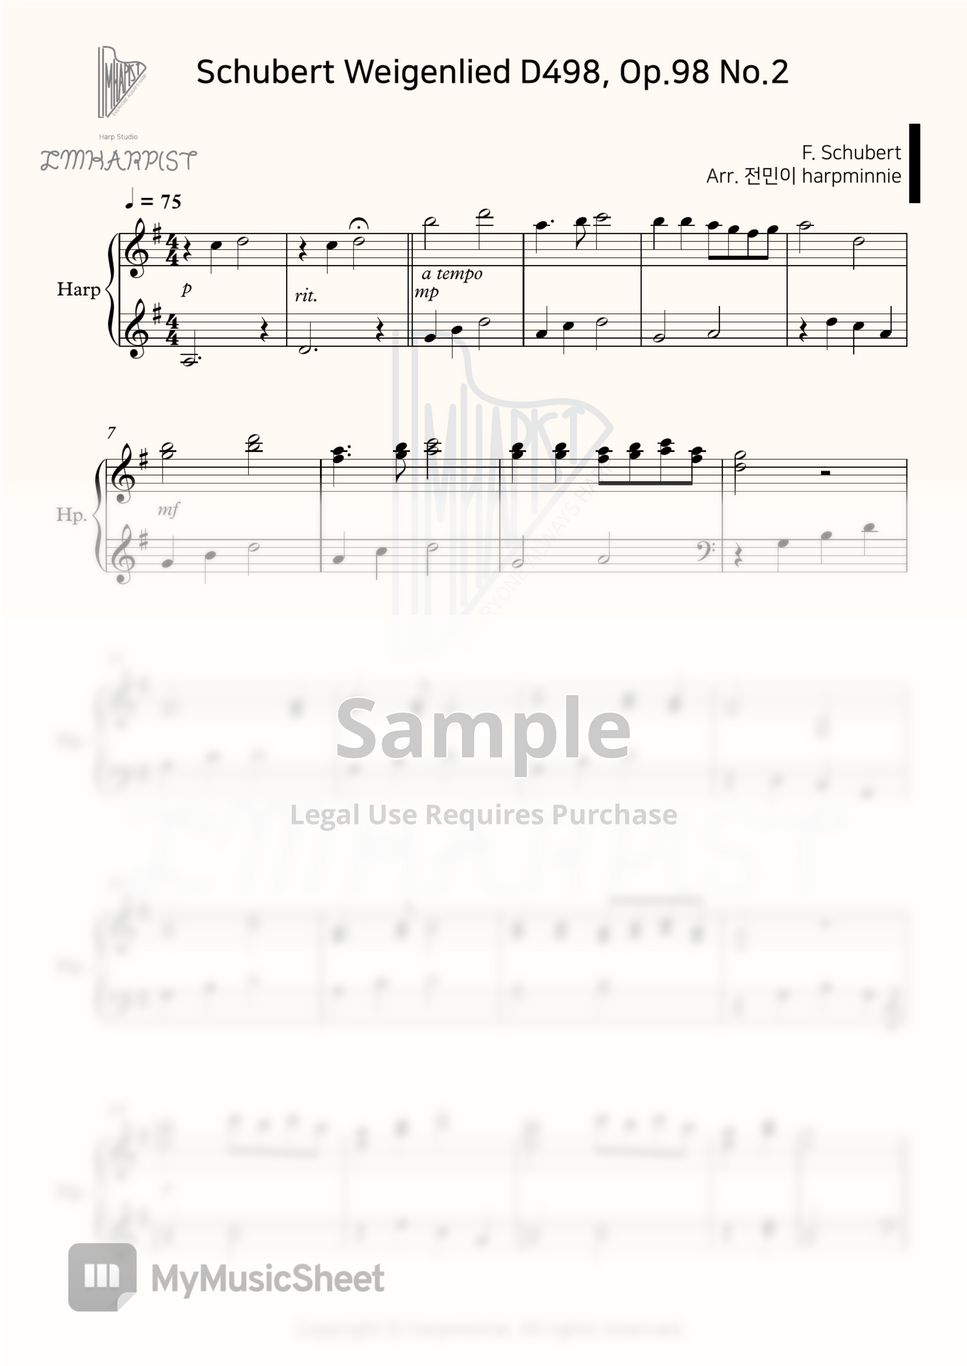 F. Schubert - Schubert Weigenlied D498, Op98 No.2｜슈베르트 자장가 by 전민이 harpminnie